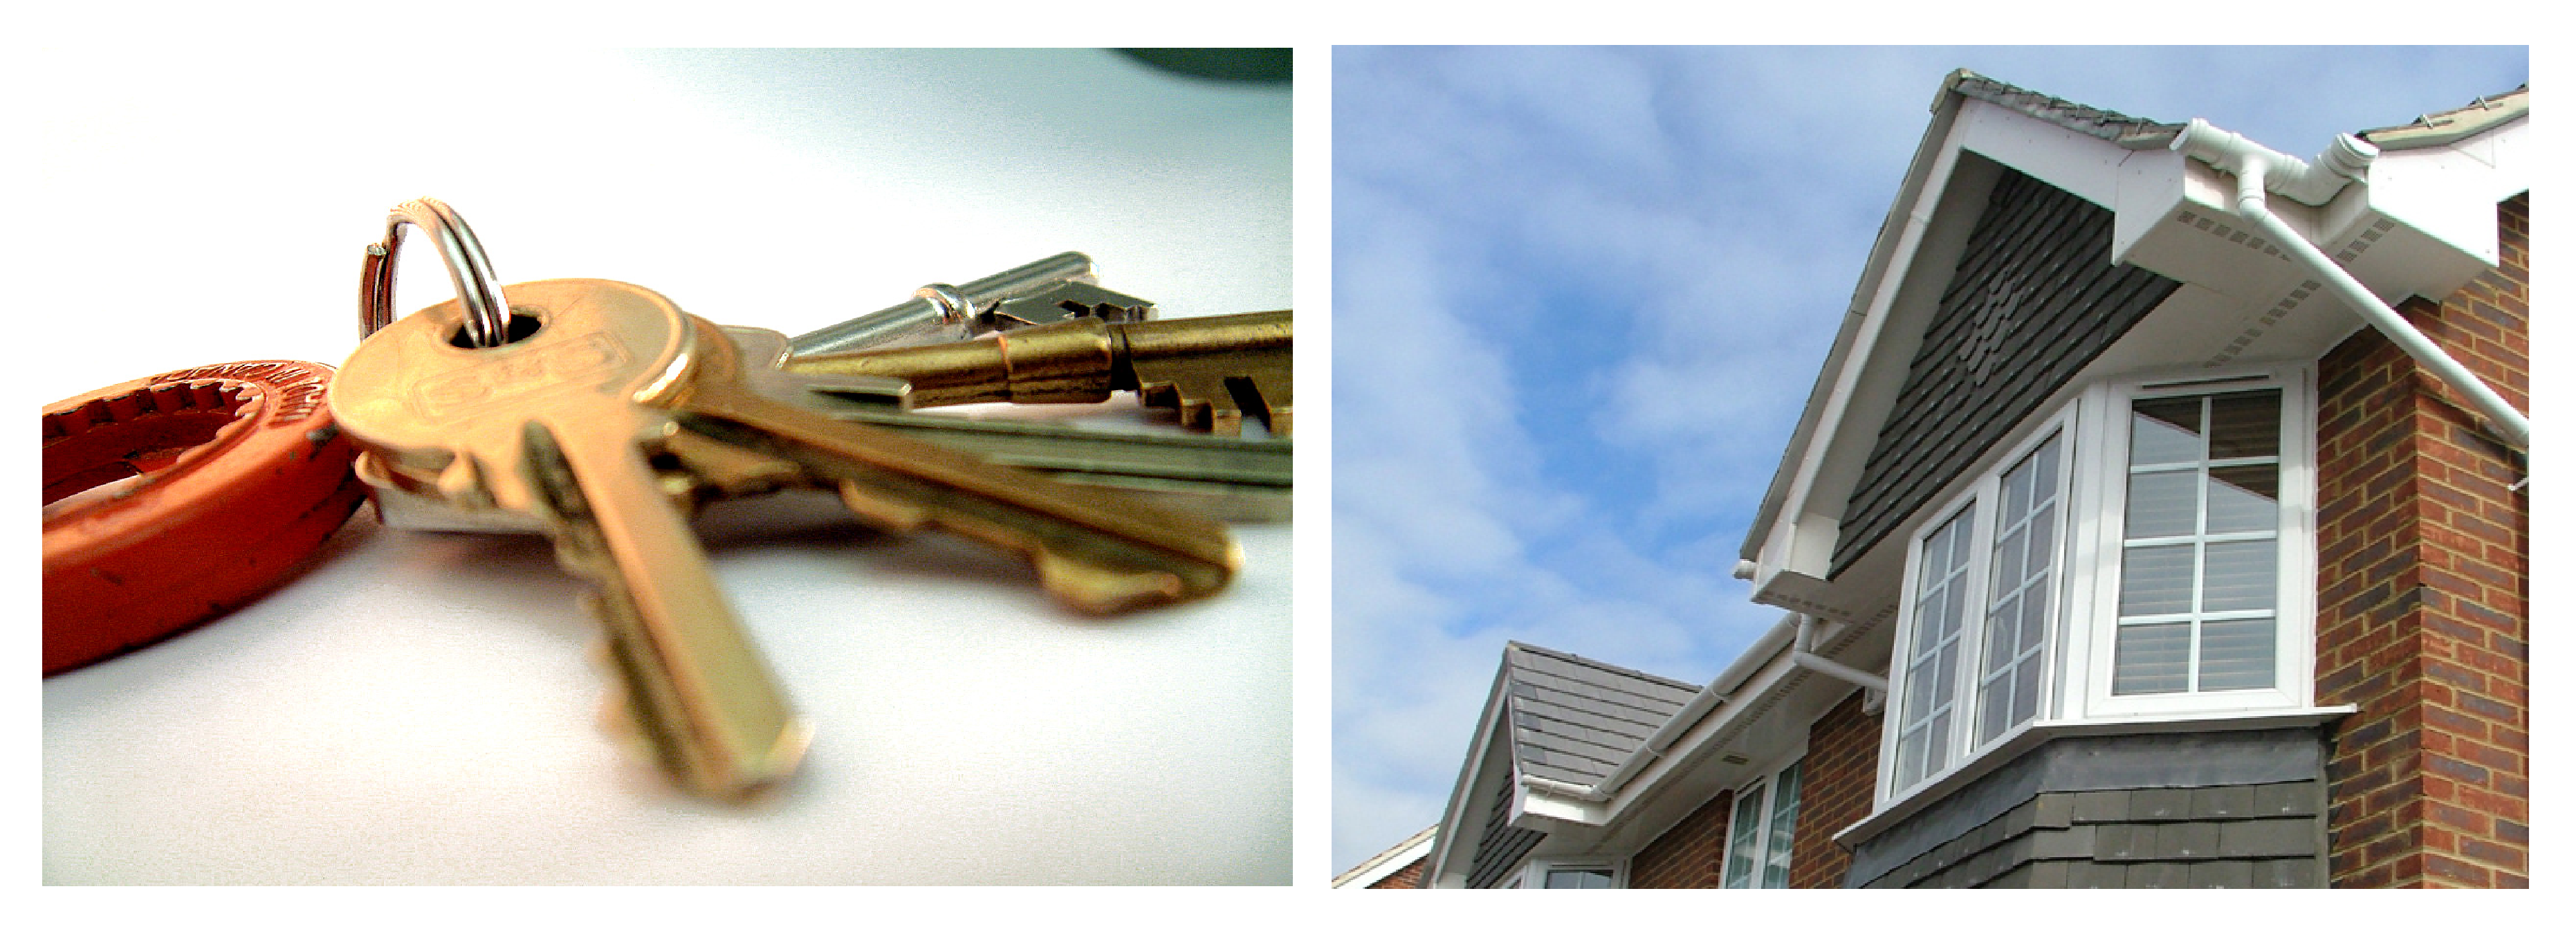 Set of keys and house